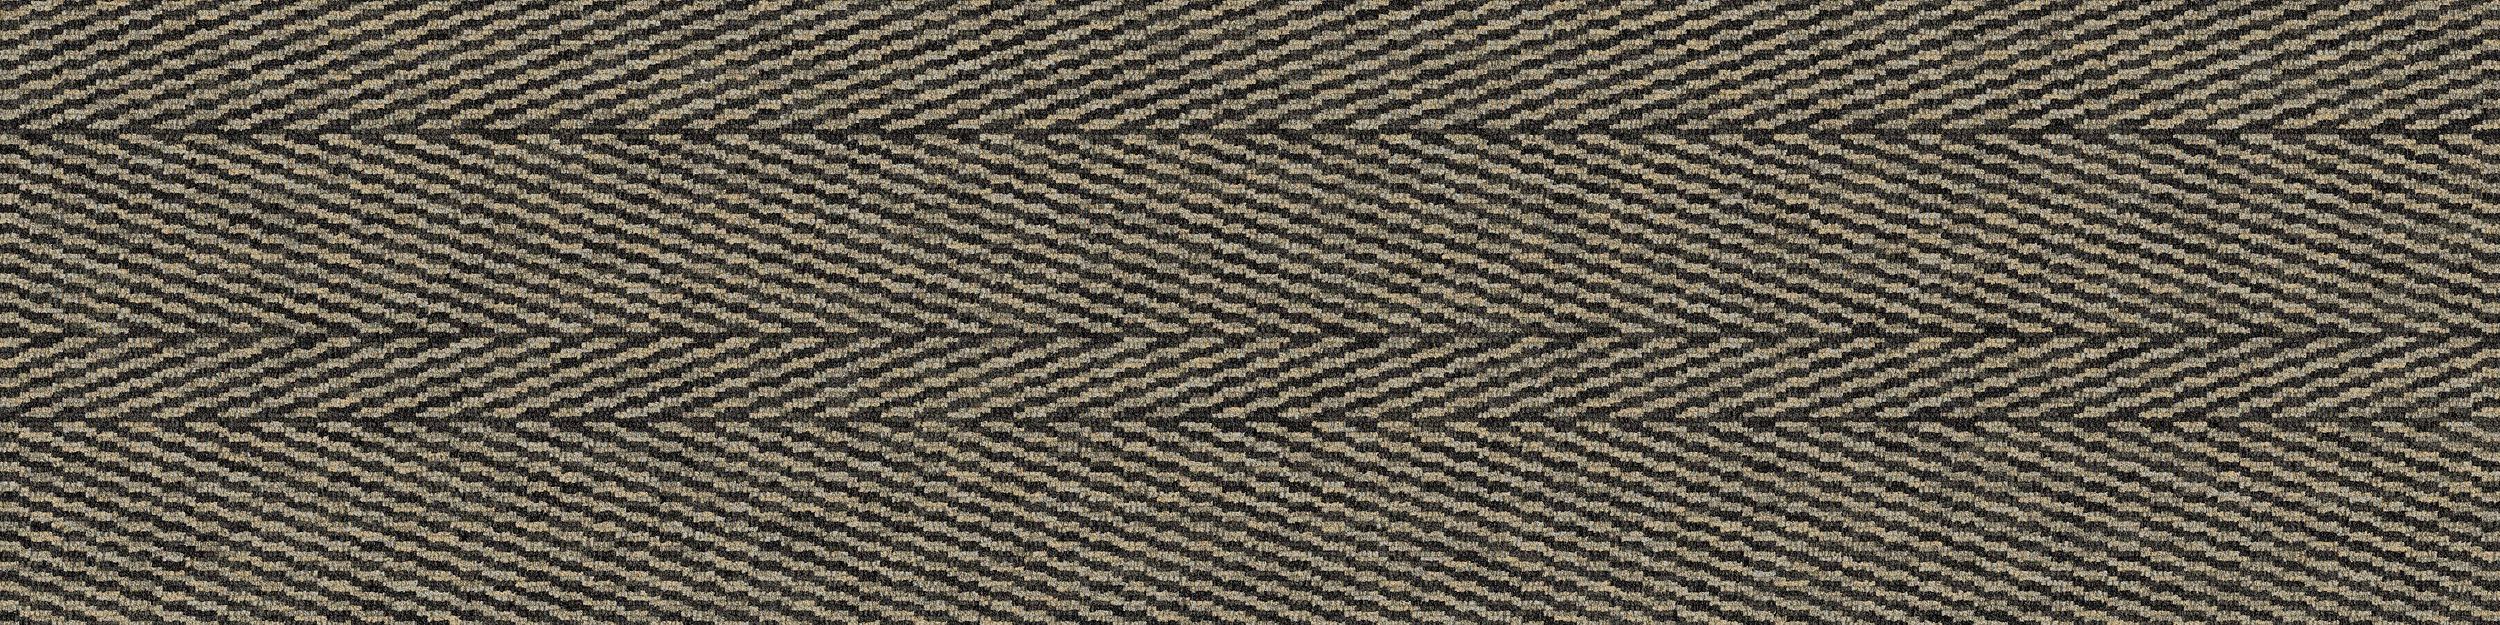 Stitch In Time Carpet Tile In Natural Stitch numéro d’image 2